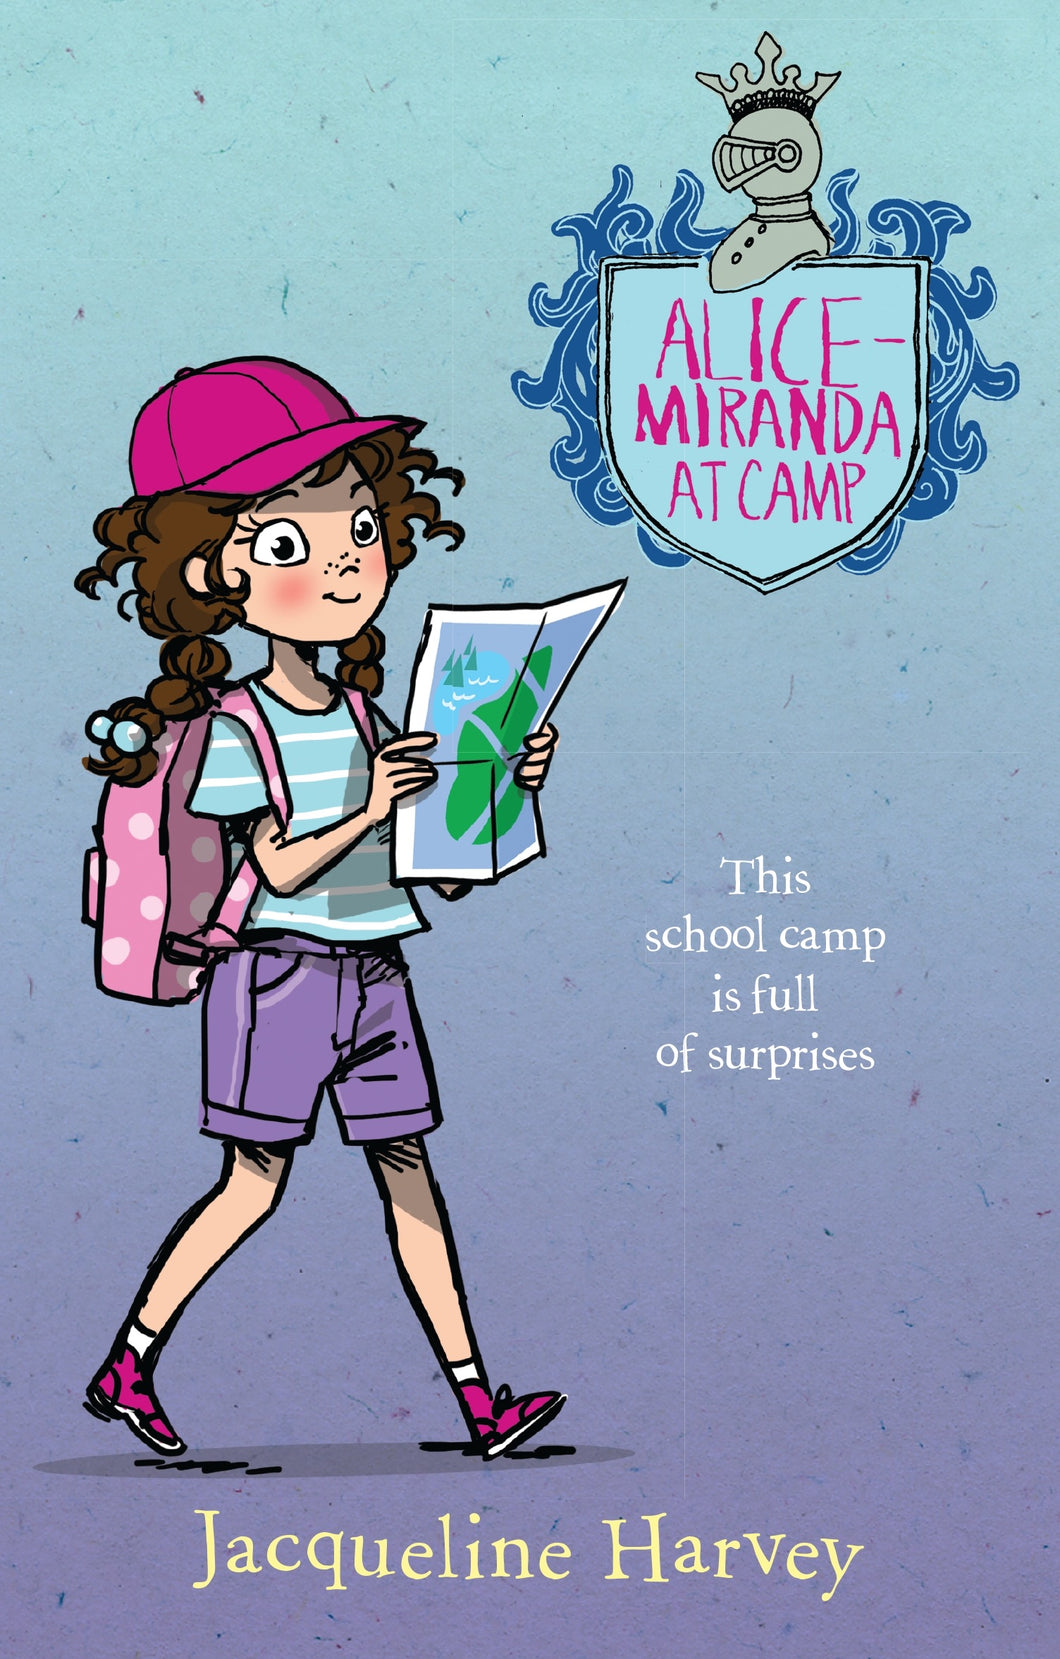 Alice-Miranda at Camp (Book #10) by Jacqueline Harvey